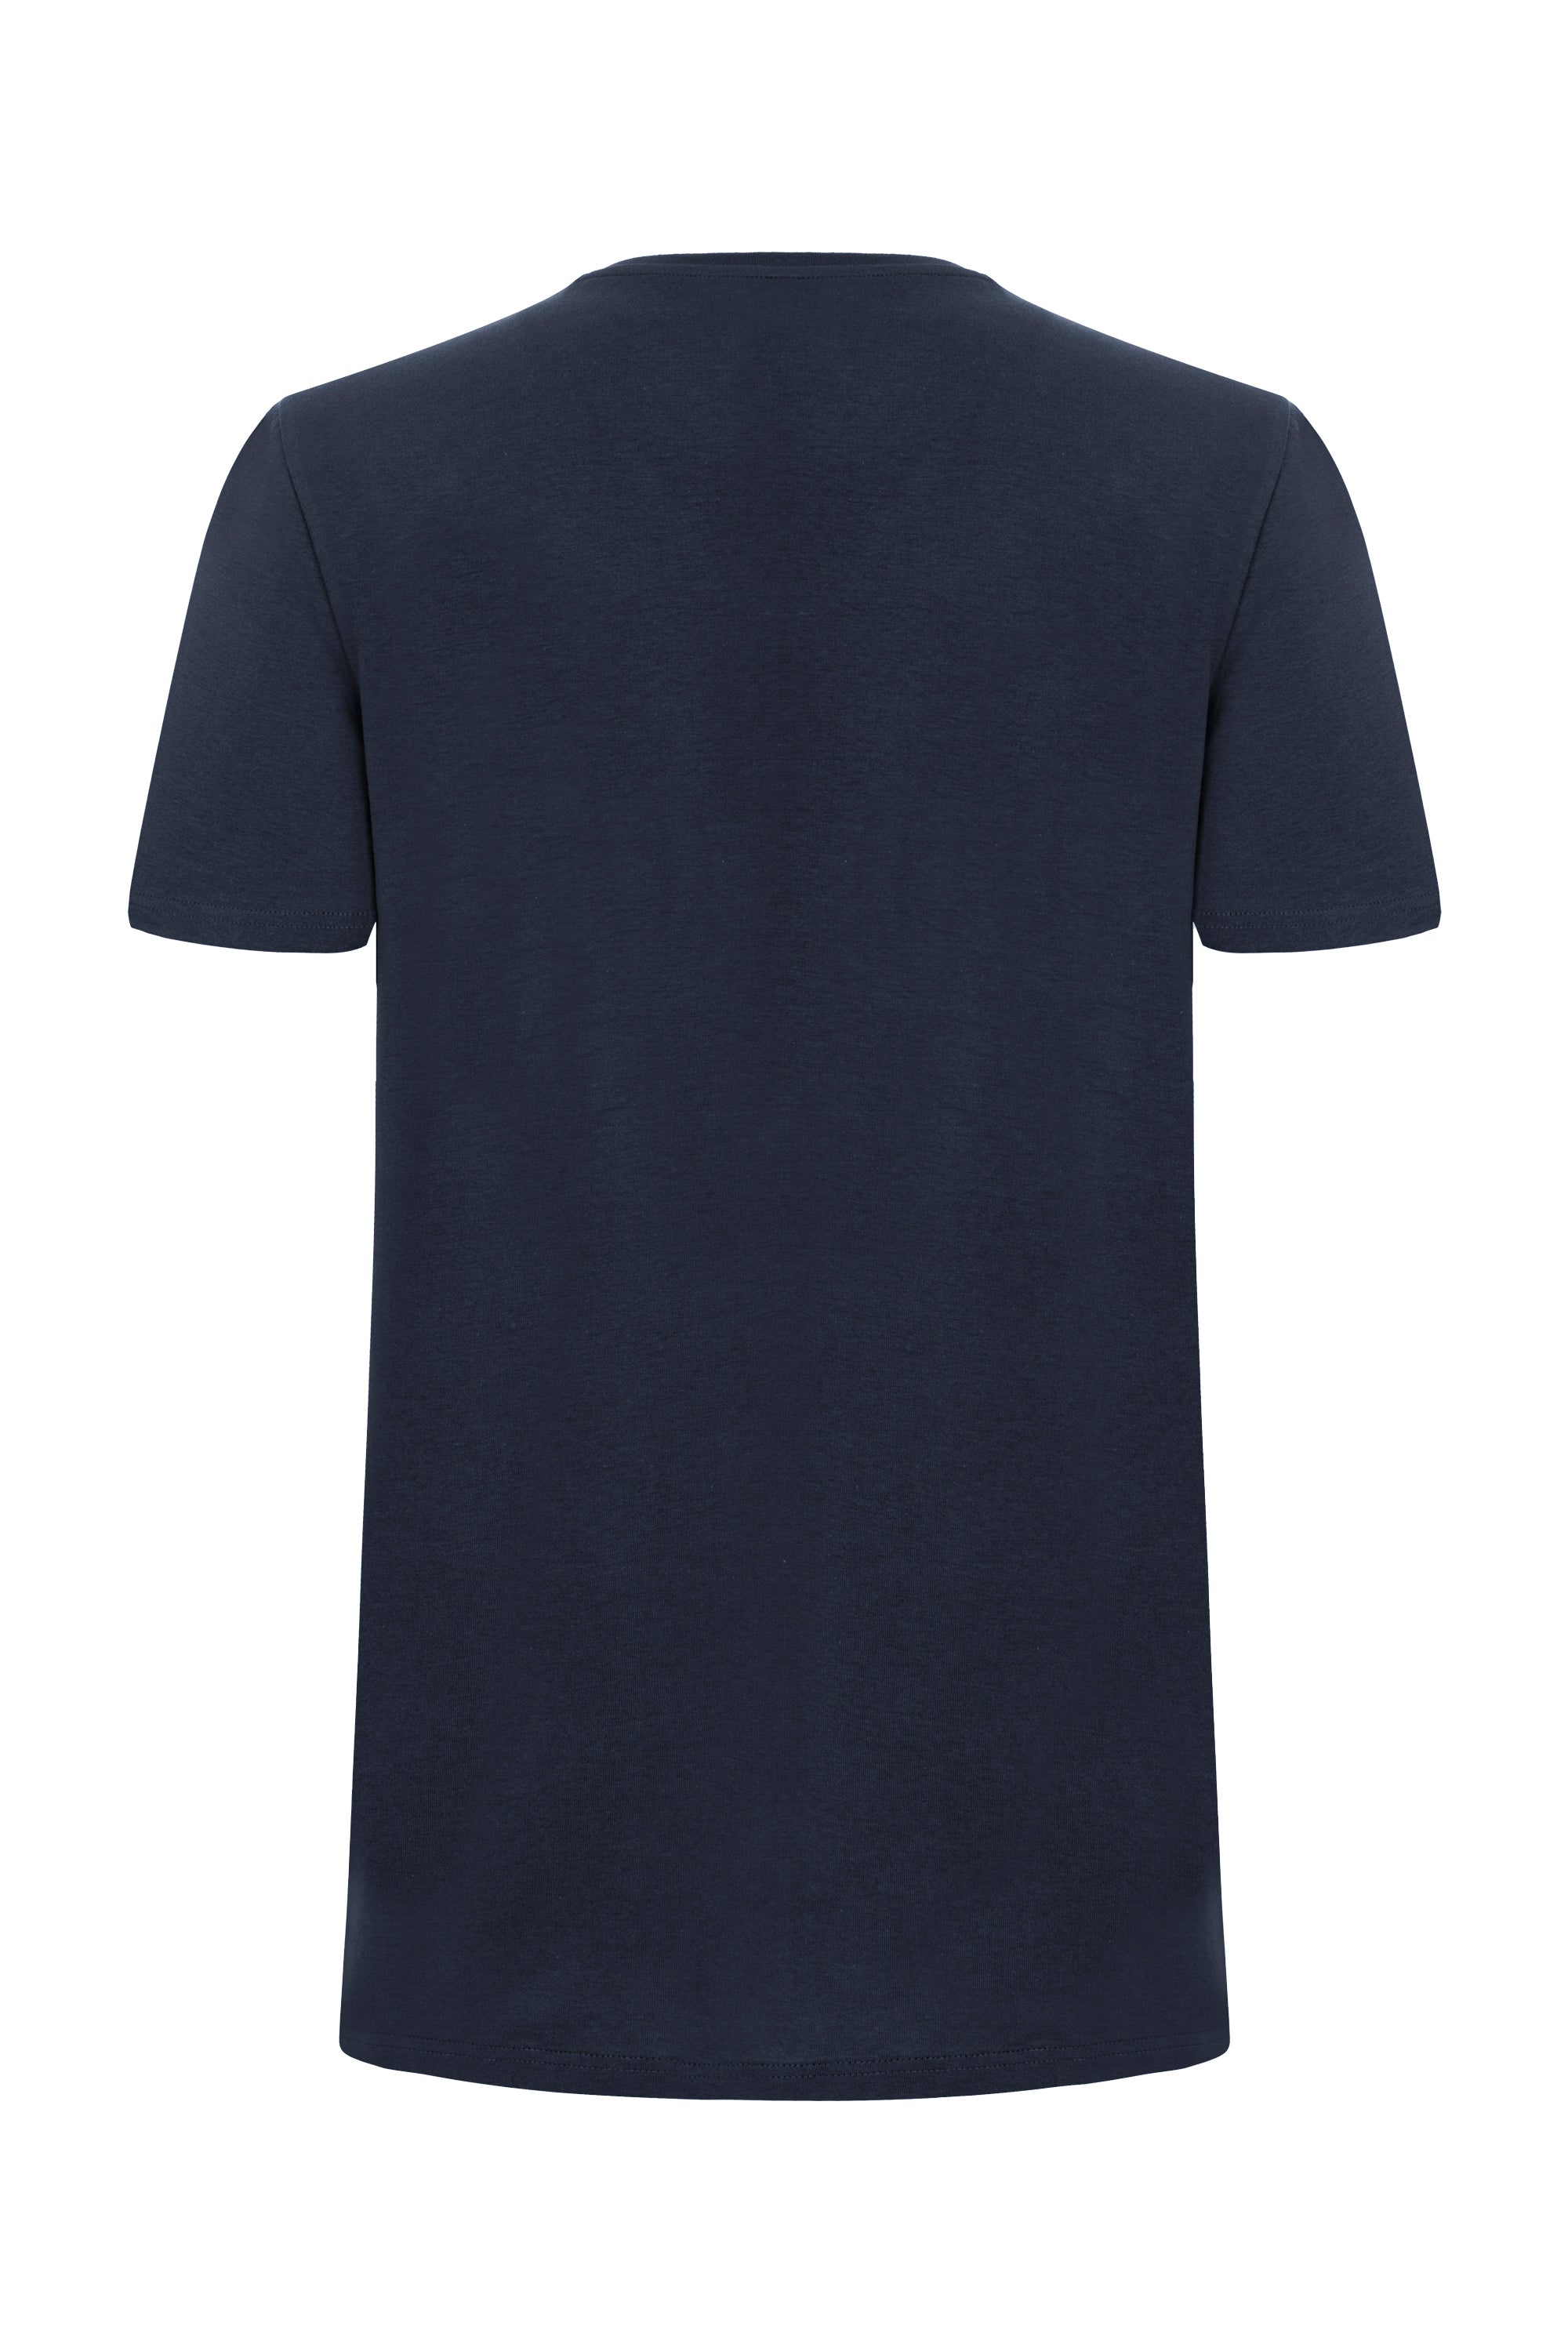 Ajax Navy T-Shirt For Man | Vary Fits